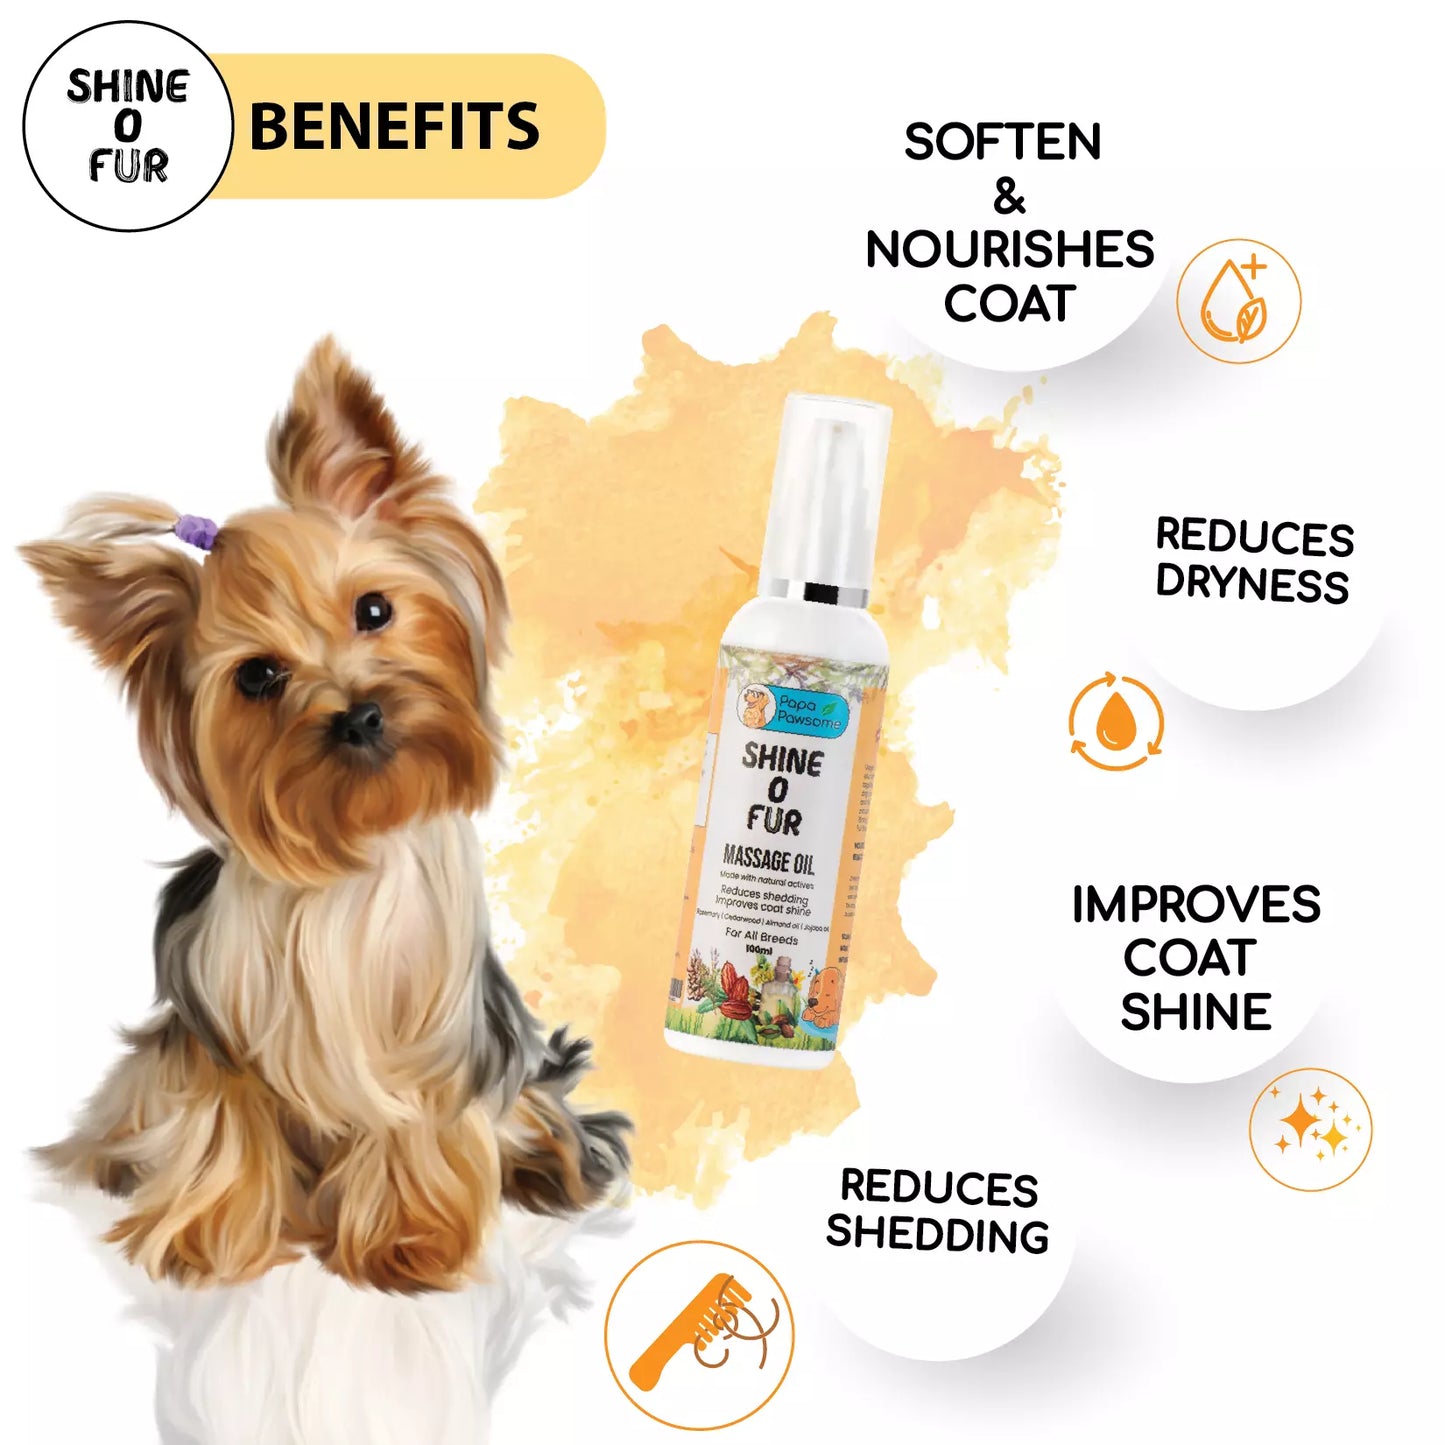 Benefits of our dog coat oil: Softens & nourishes coat, reduces dryness, enhances shine, and minimizes shedding.